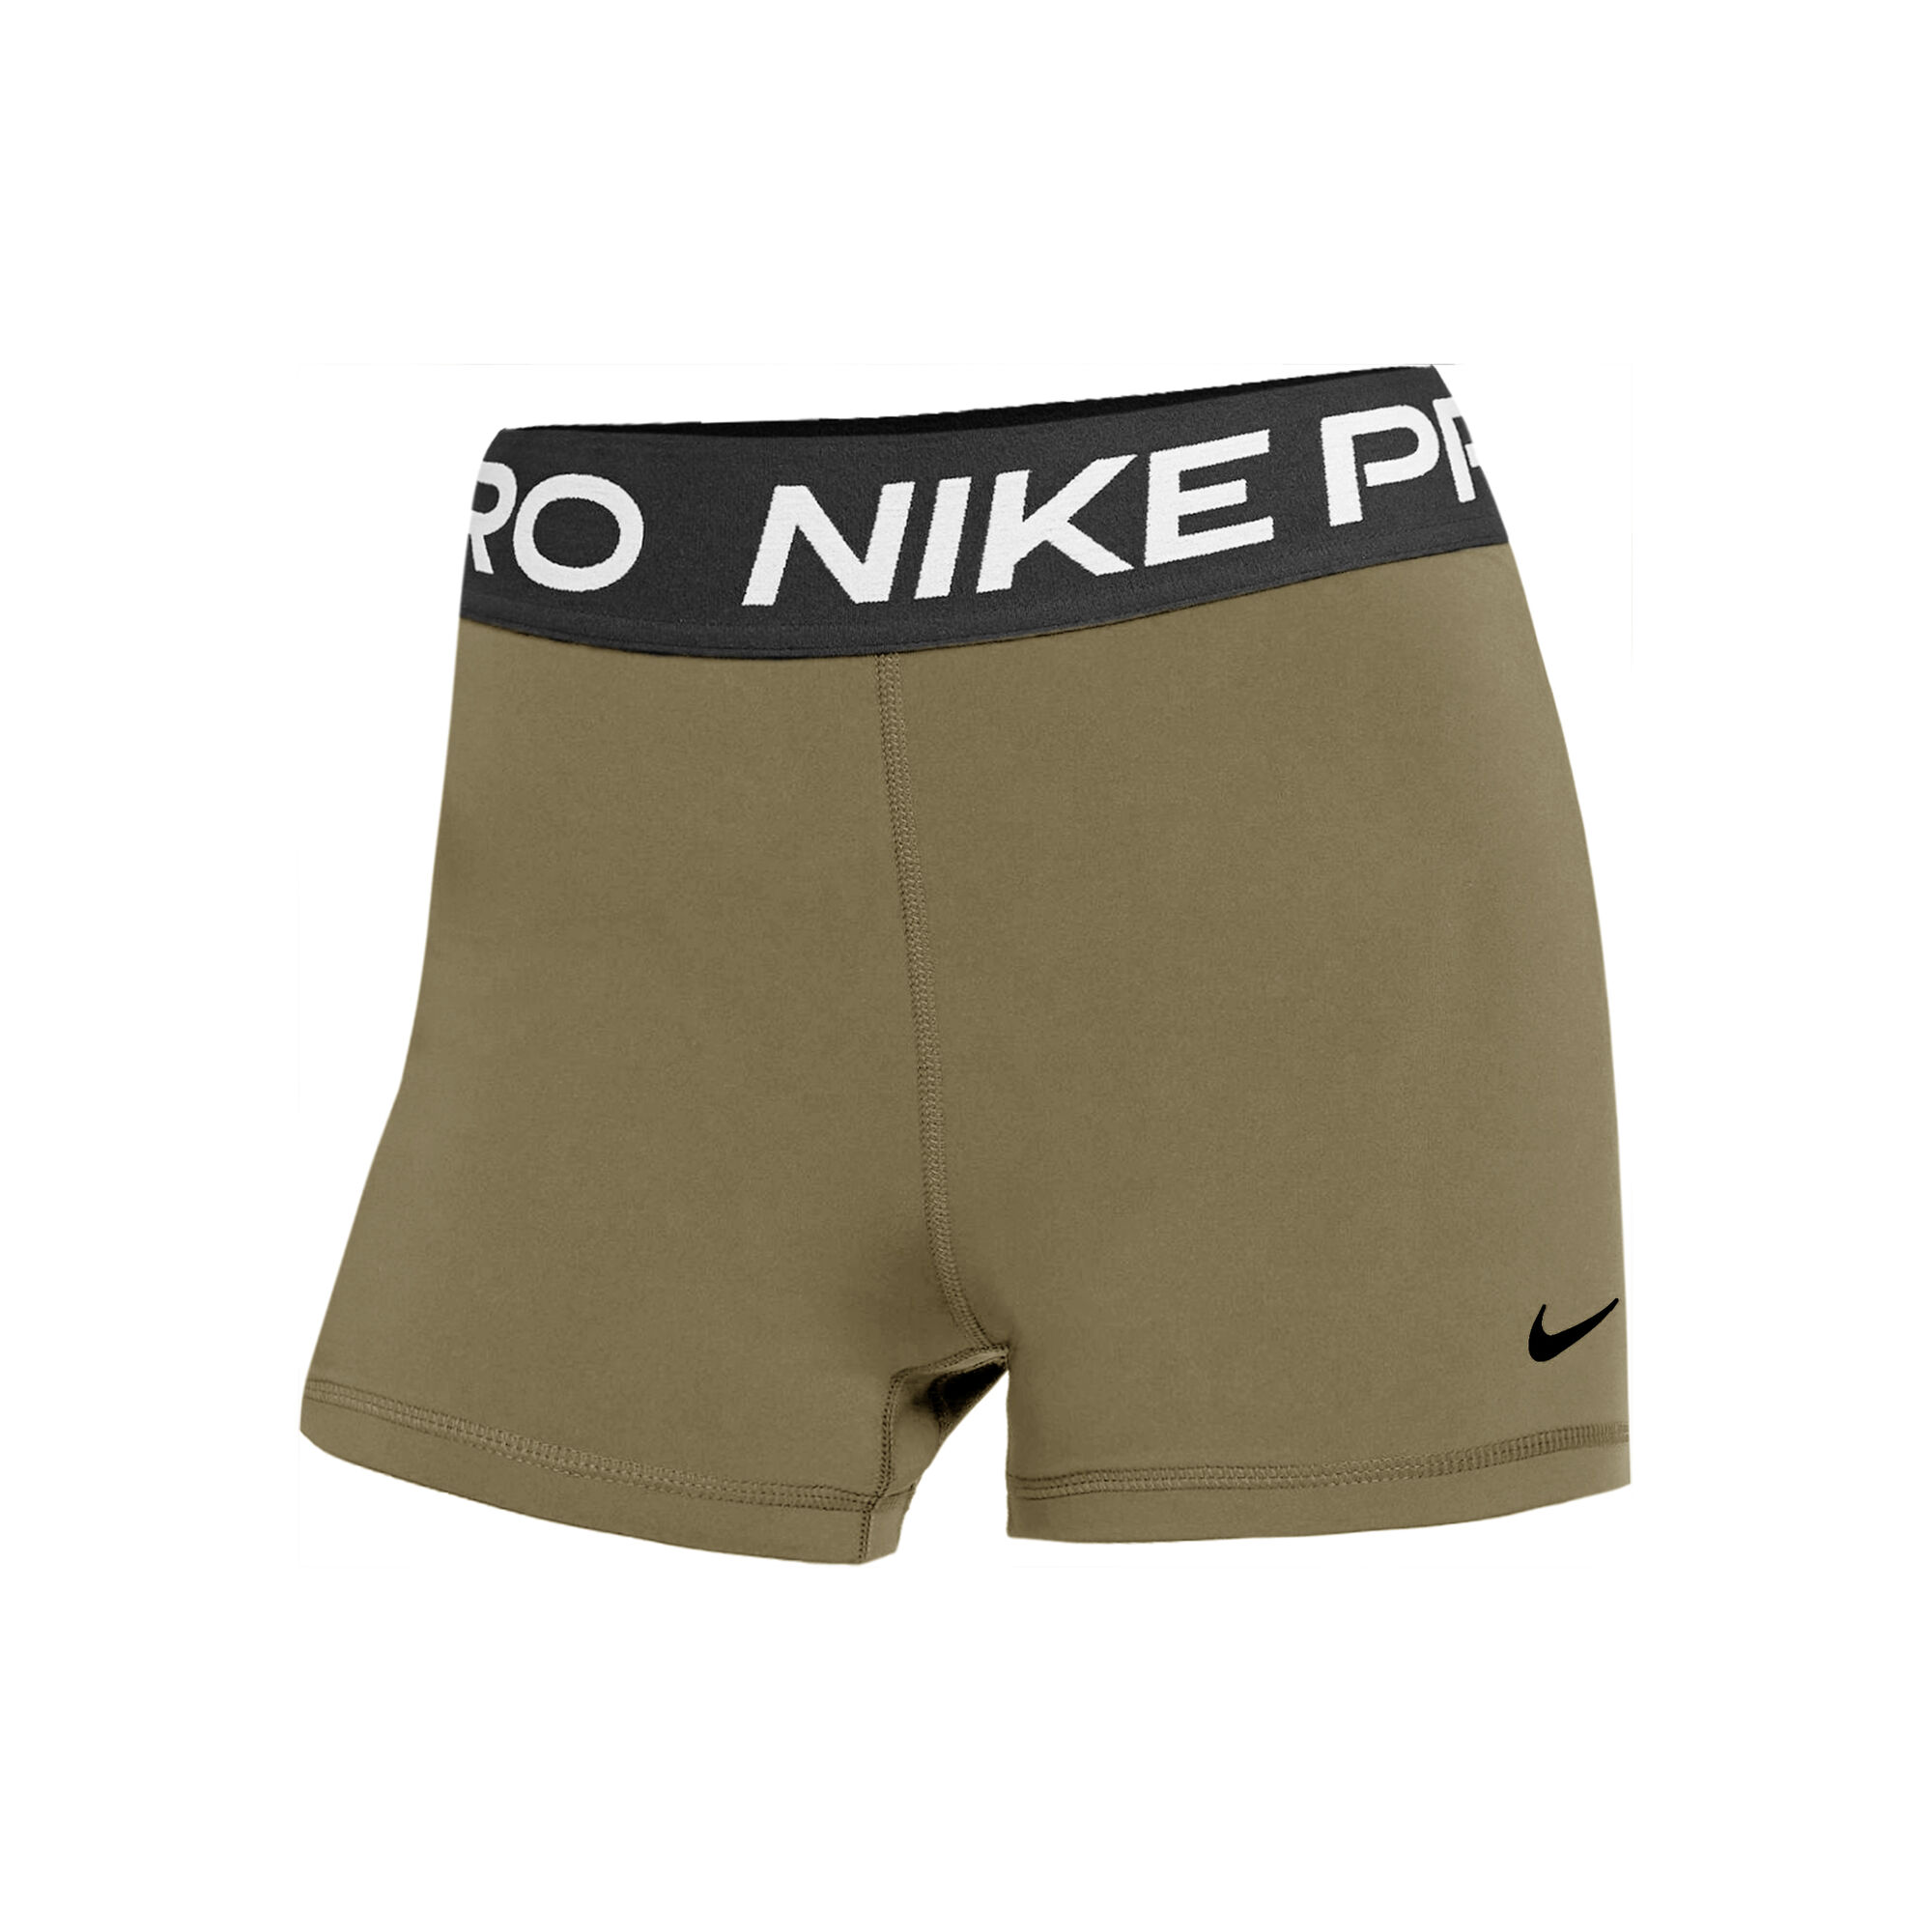 Buy Nike Pro Ball Shorts Women Olive, Black online